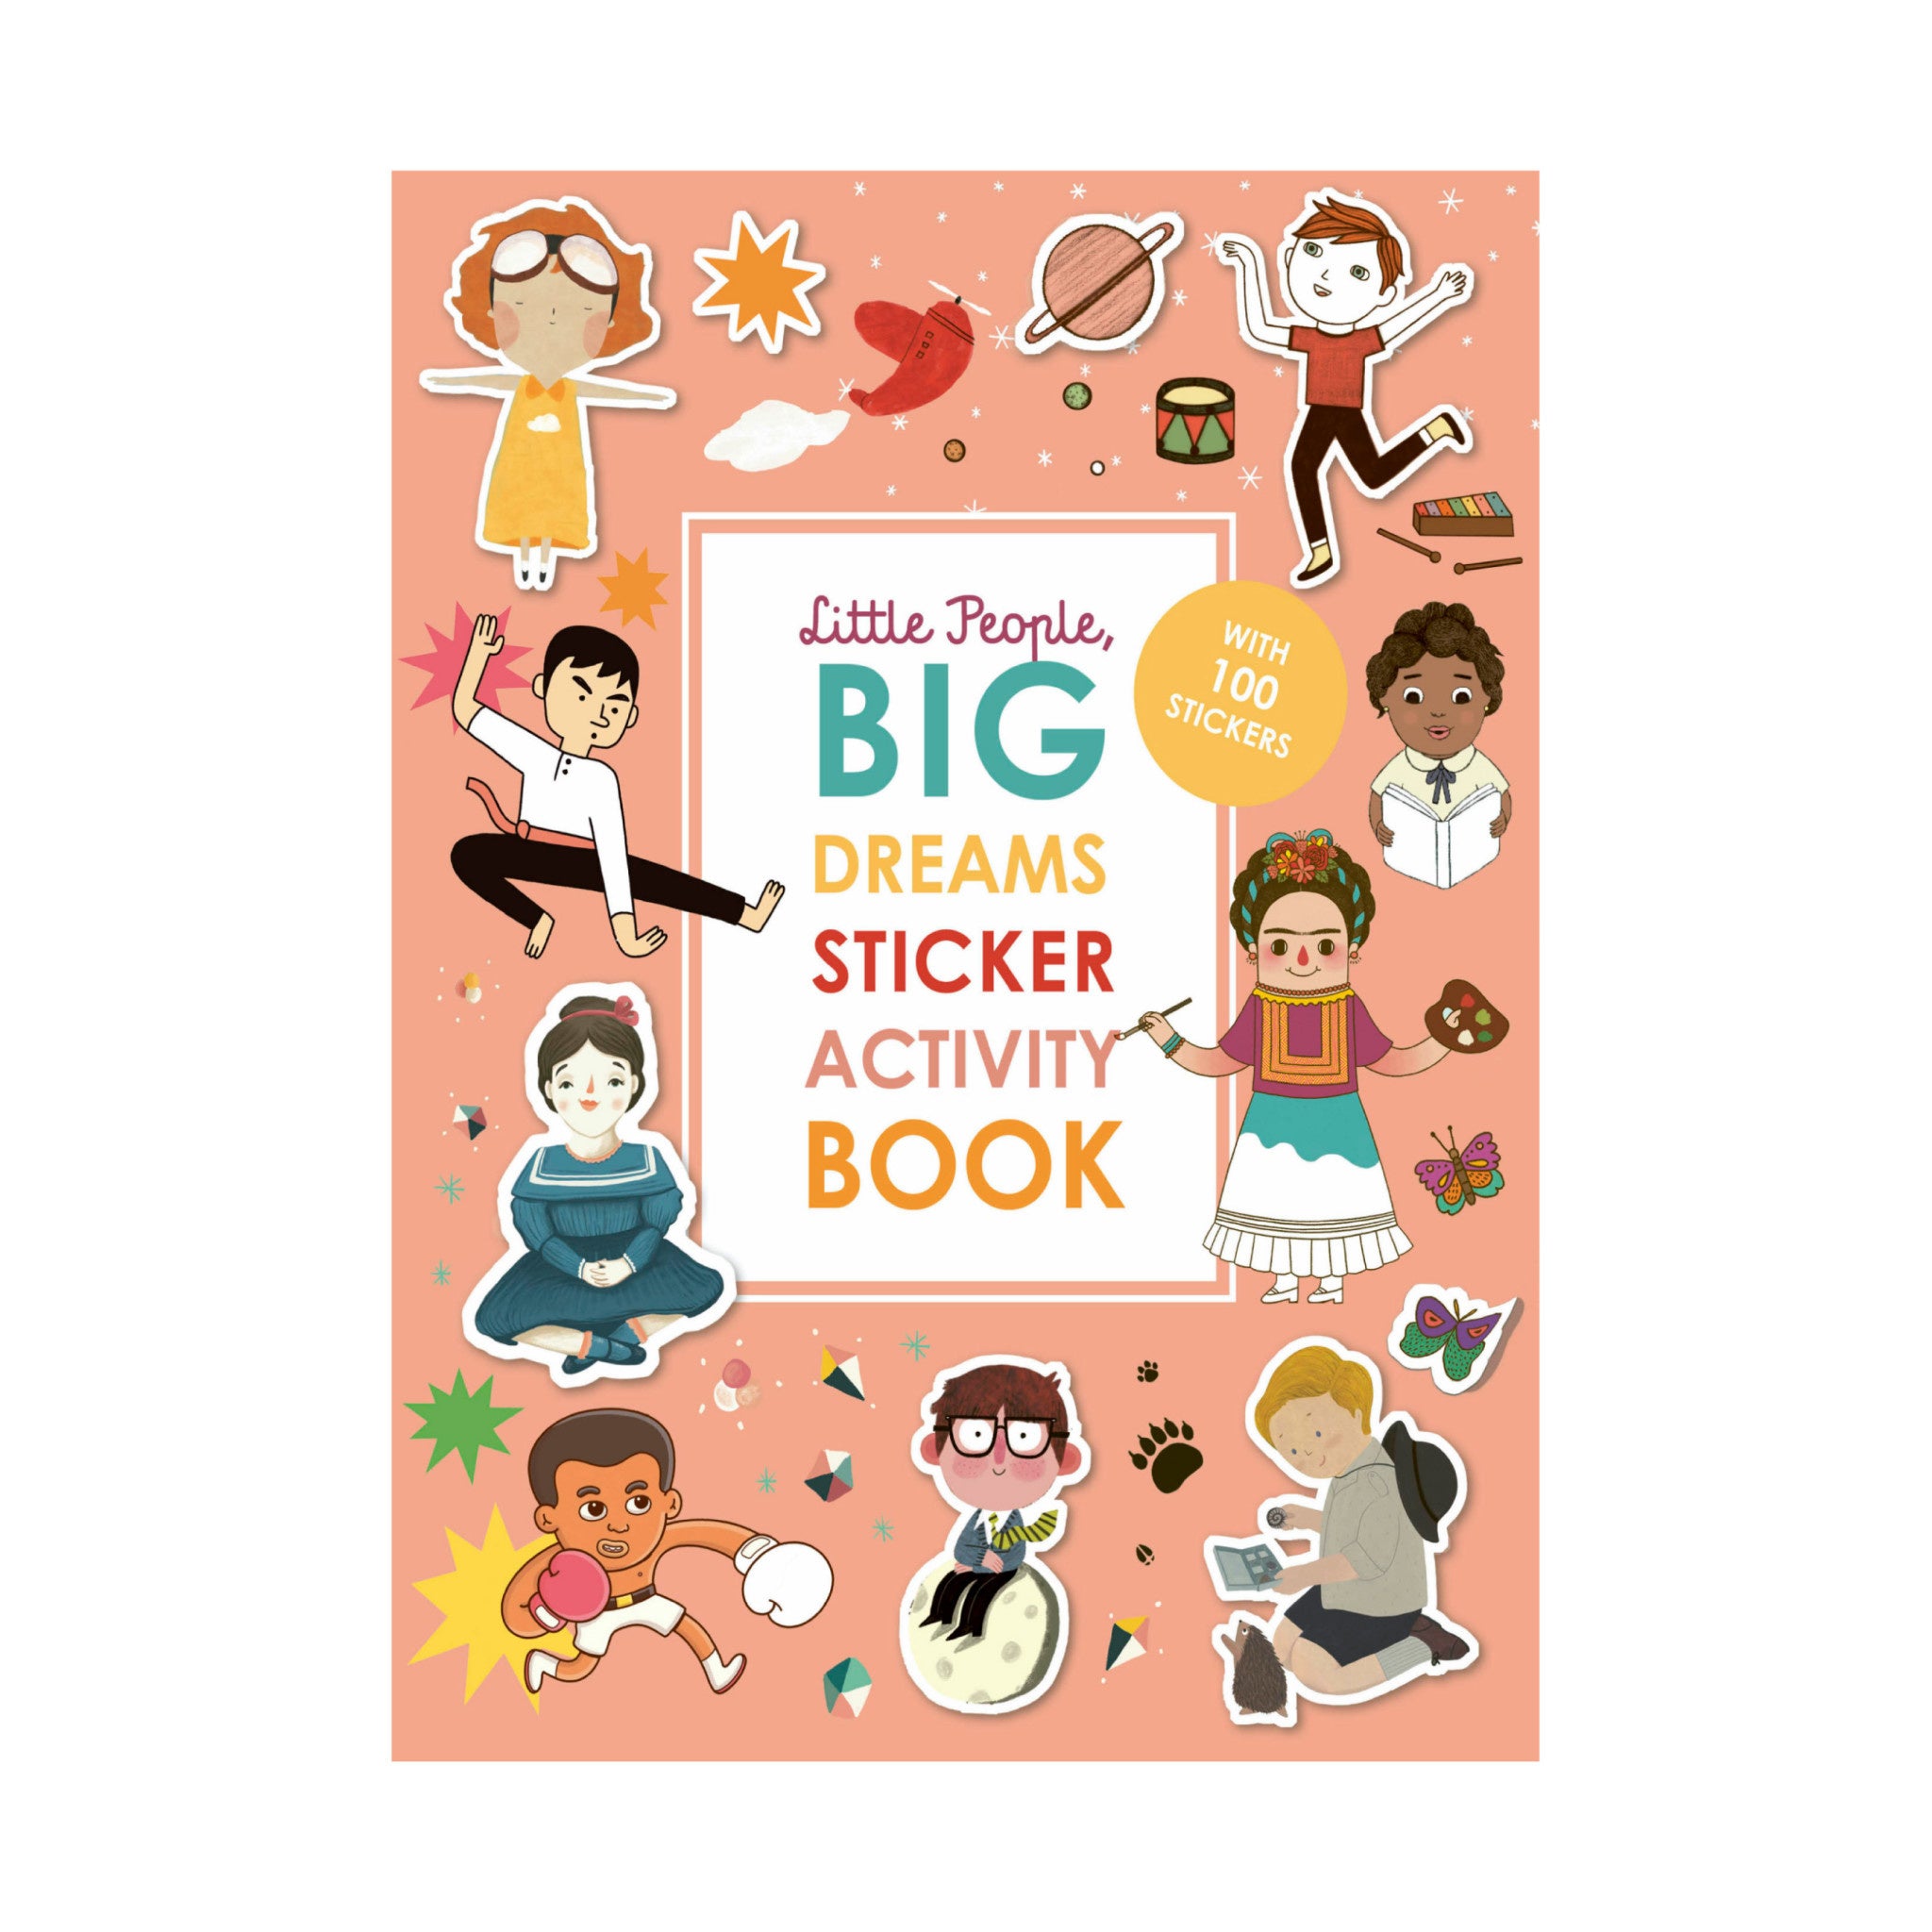 Little People, Big Dreams Sticker Activity Book: With 100 Stickers (Little People, Big Dreams) - Wynwood Walls Shop